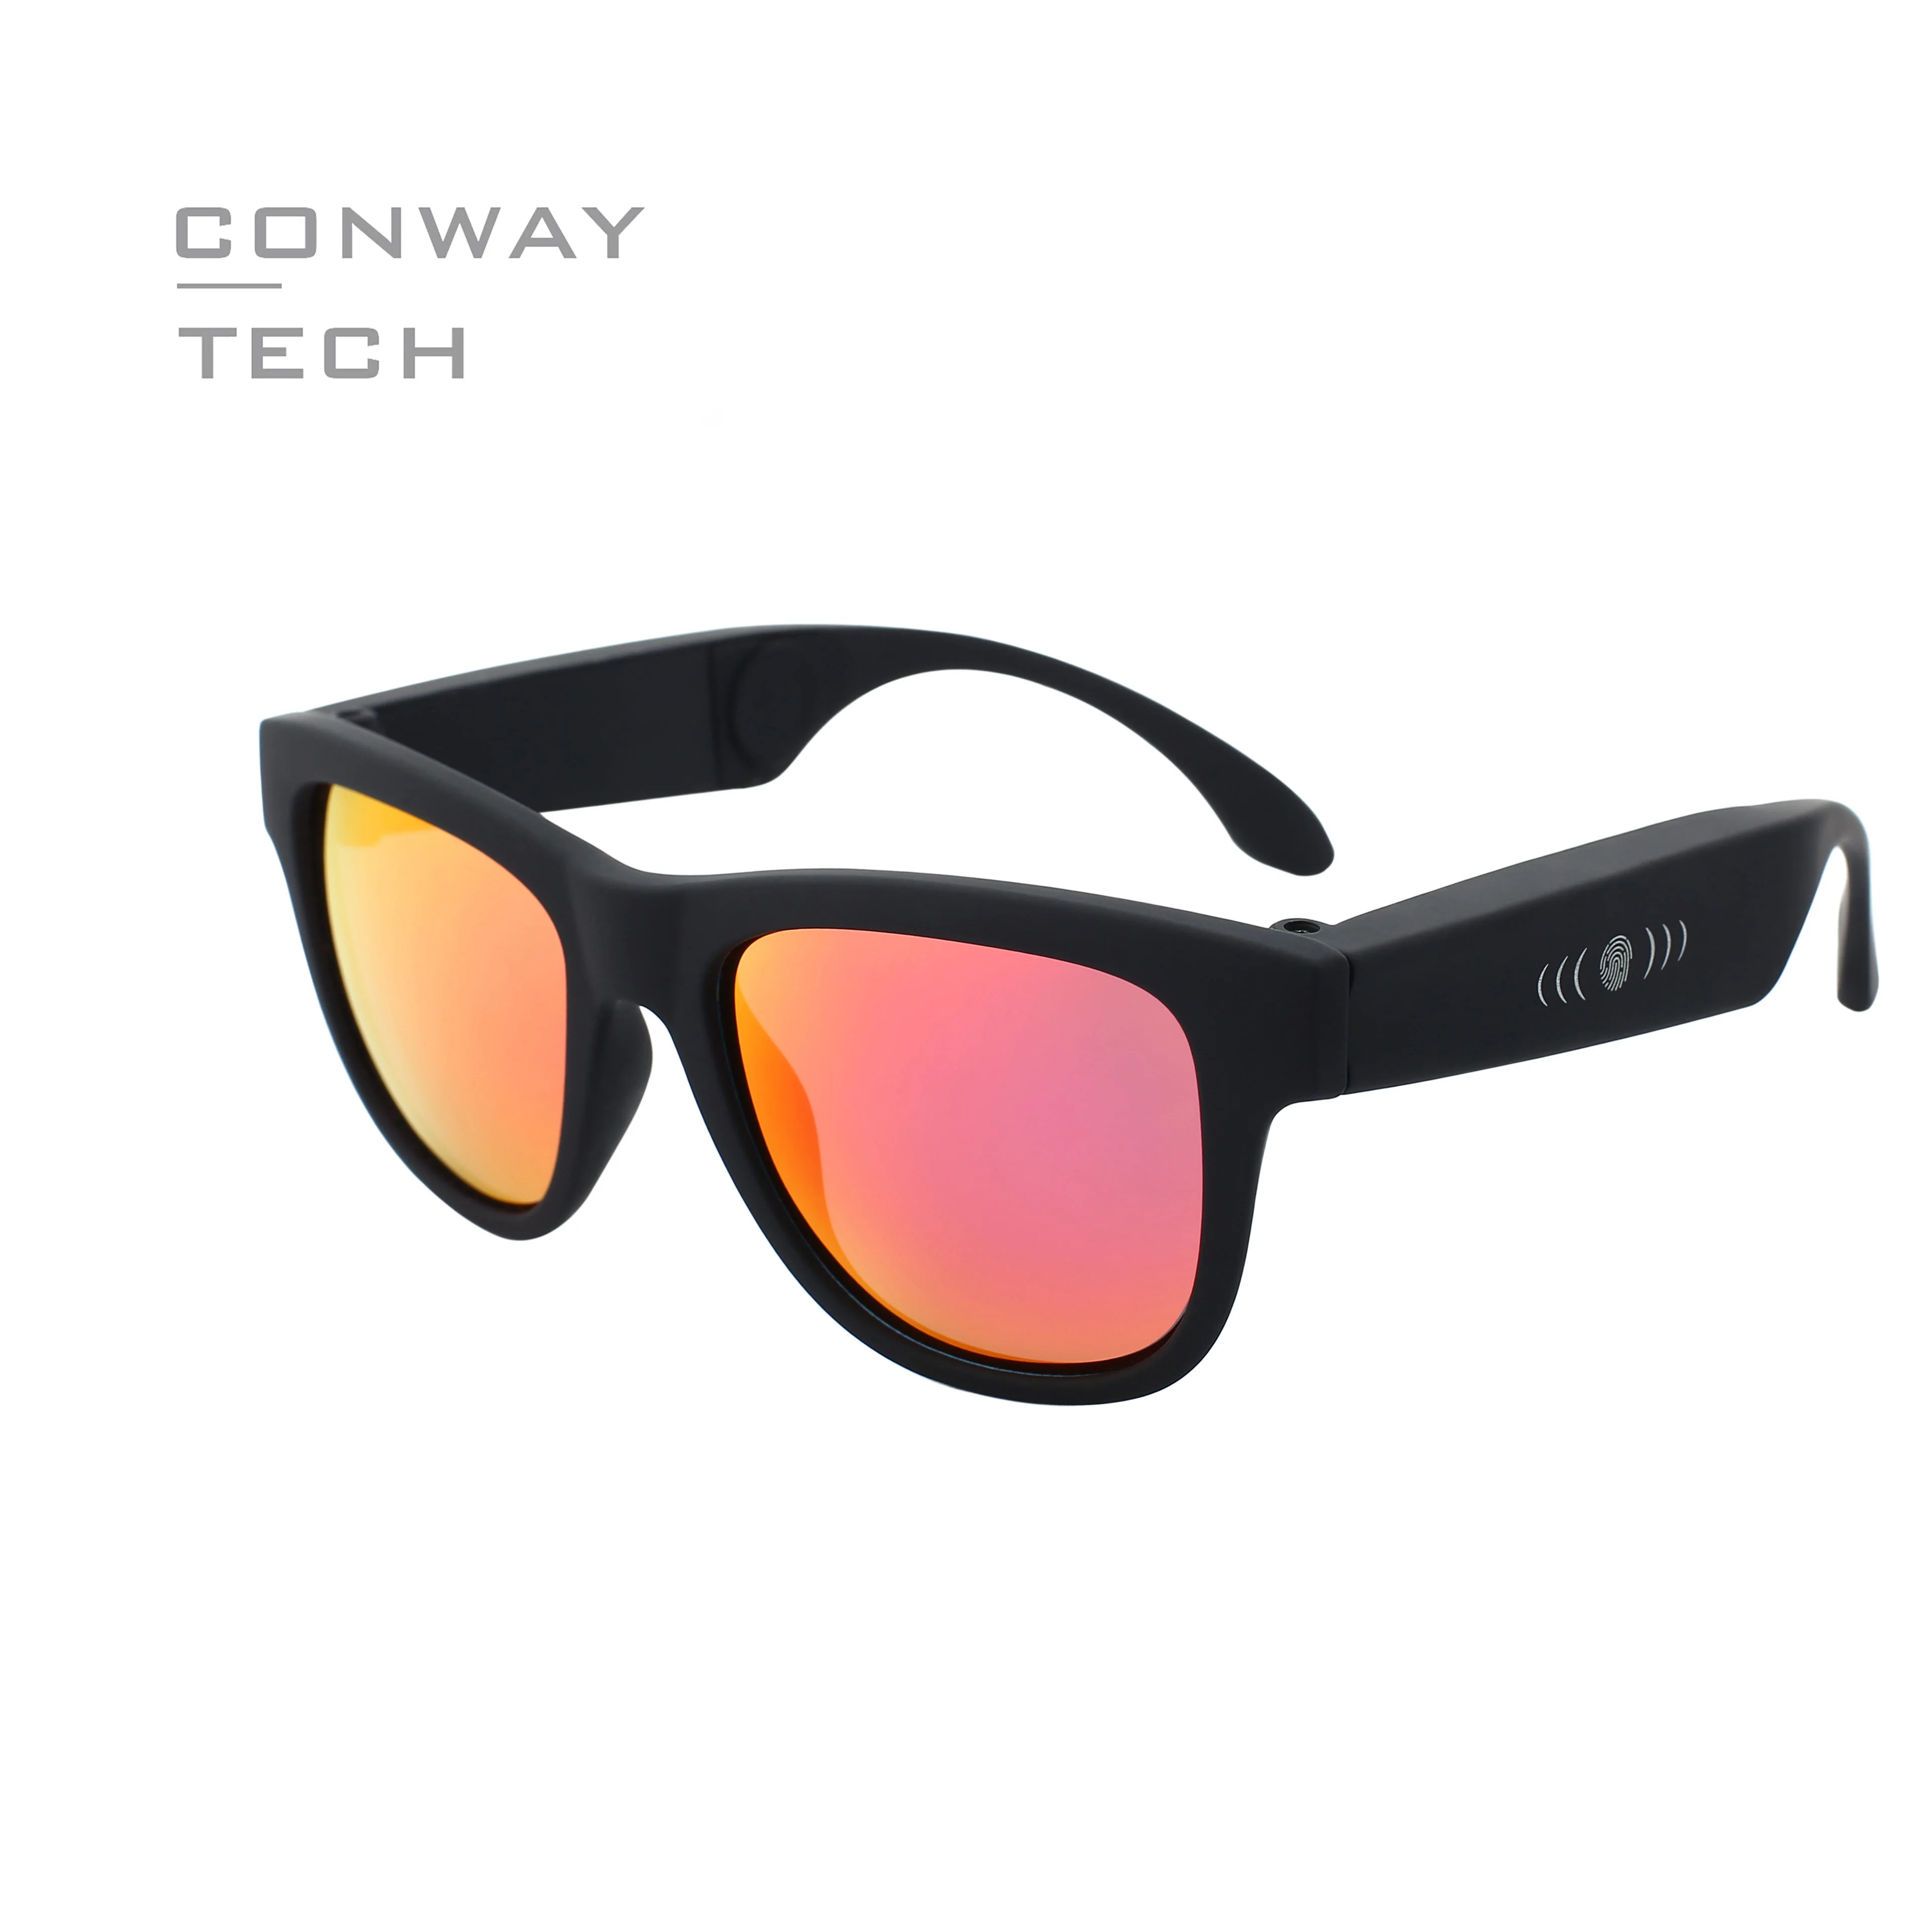 

Delvelop Bone Conduction Speakers Glasses Headset Sunglasses UV400 4.2 Smart Touch